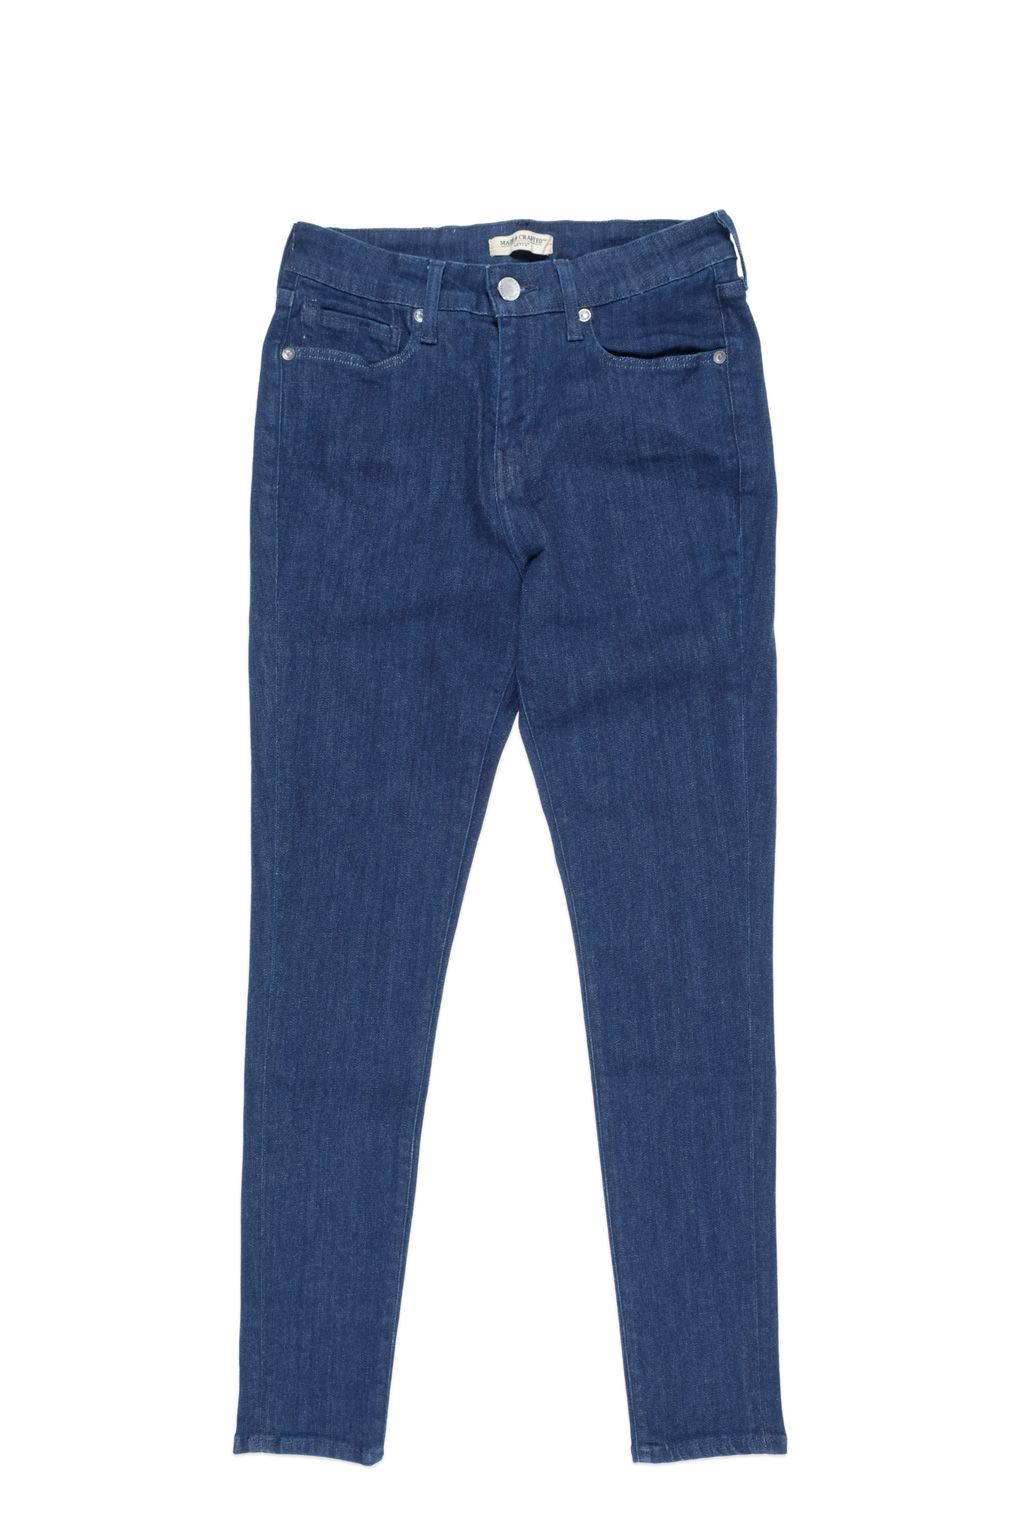 Women's Silver Rebel Jeans - 40% off by Levi's - E35 Shop